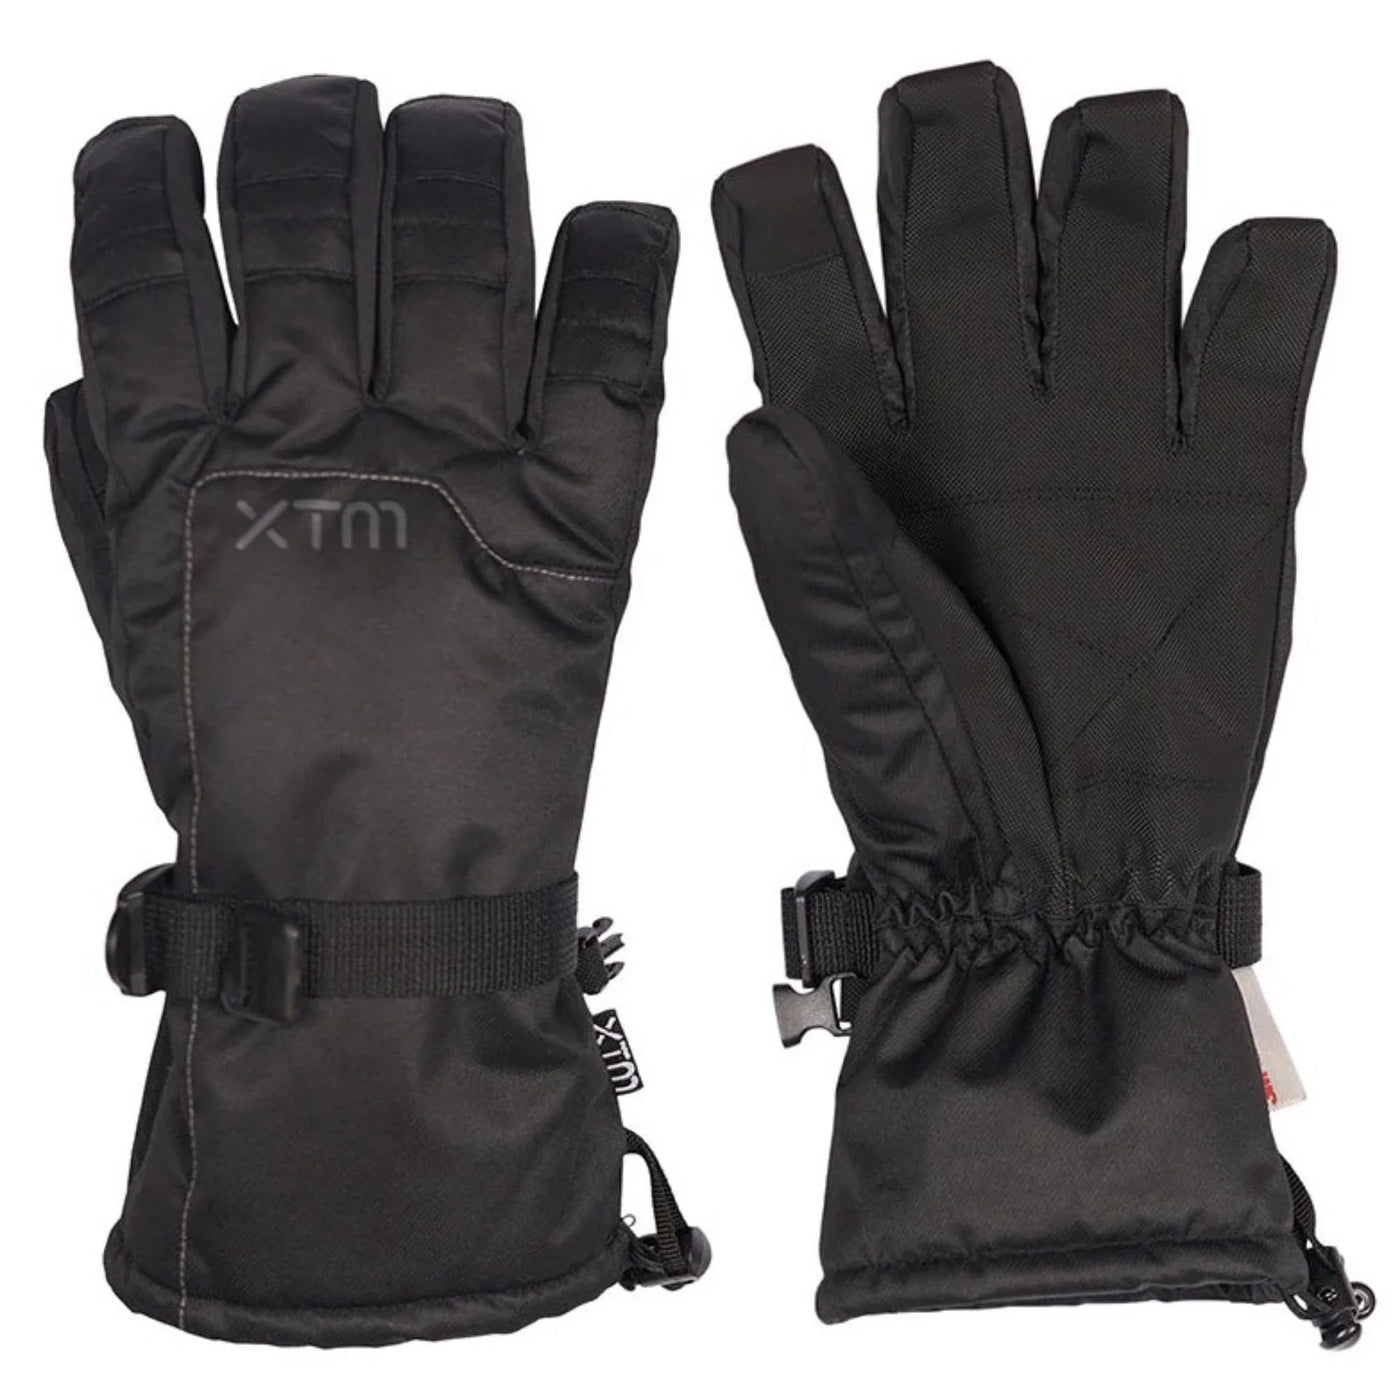 XTM Kids Zima II Snow Gloves - Black